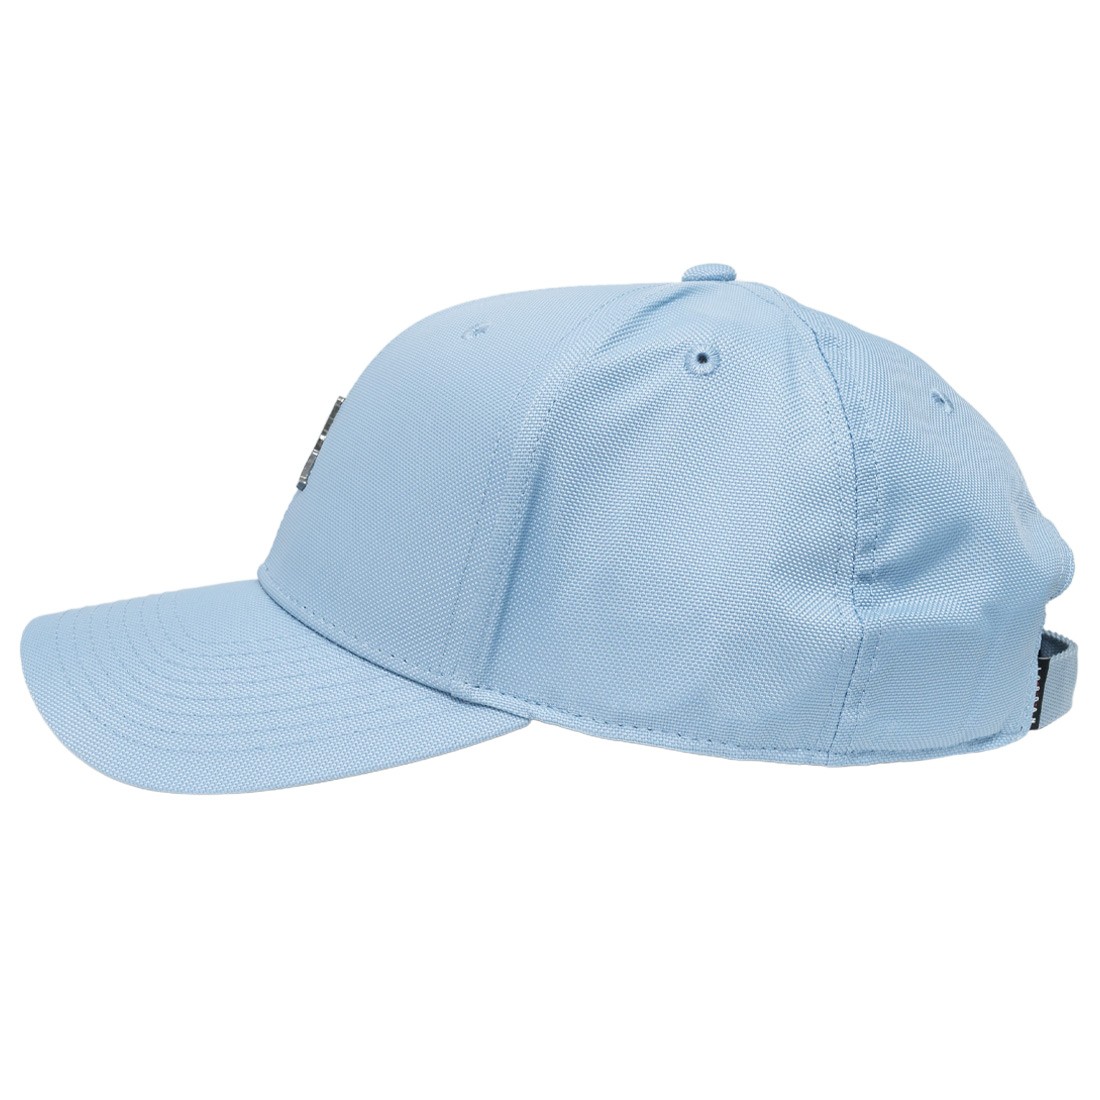 jordan unisex jordan rise cap adjustable hat blue grey gun metal